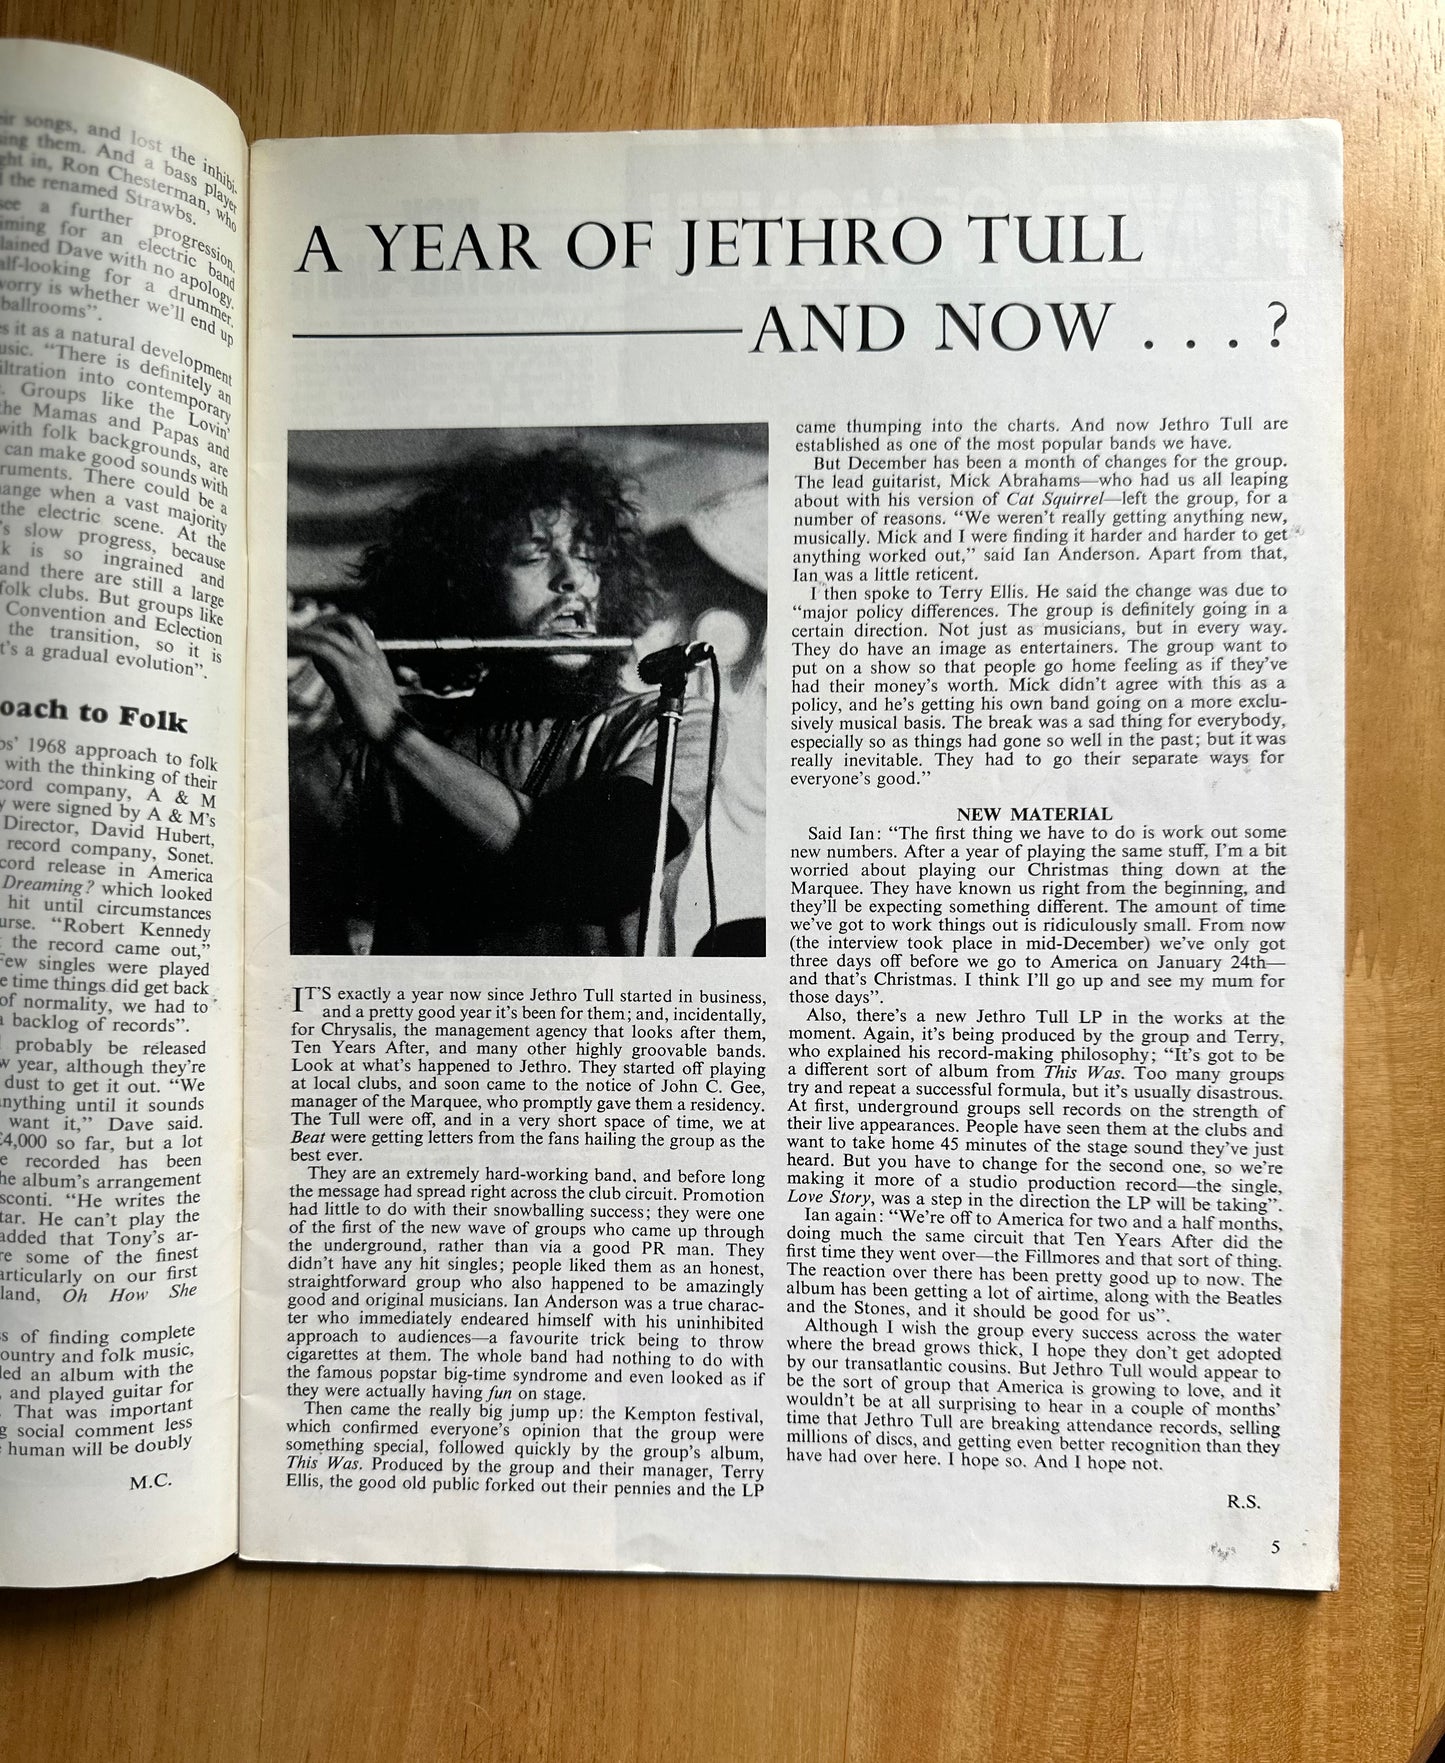 1969 January Beat Instrumental (Jethro Tull, Peter Green)